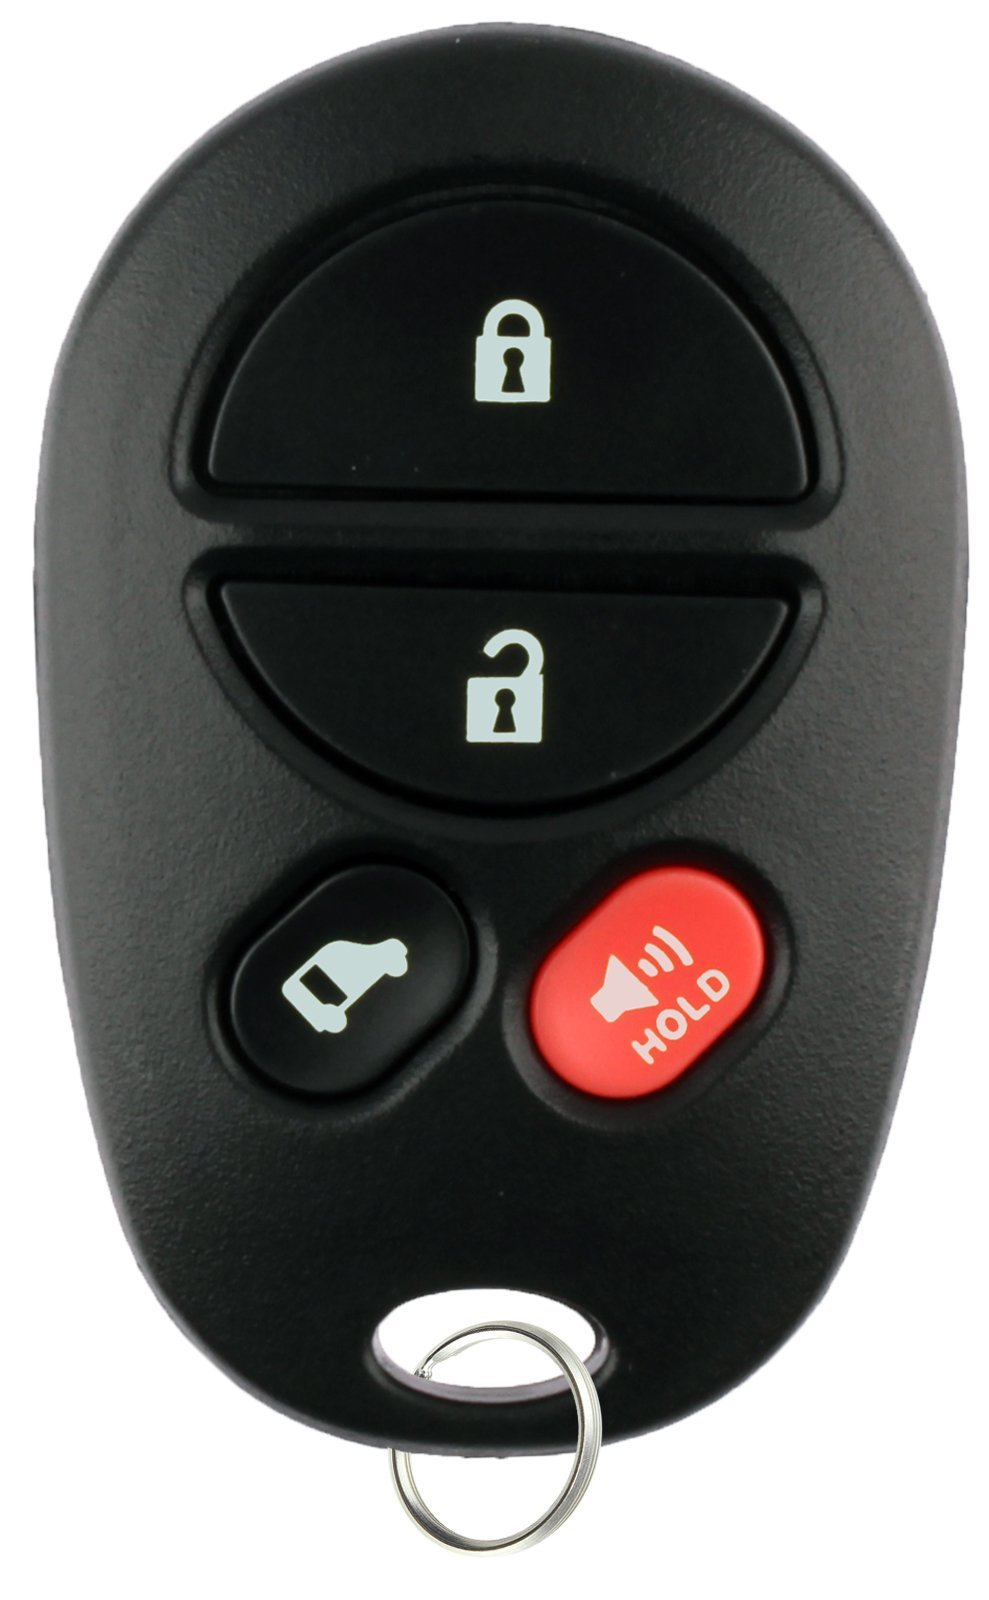 KeylessOption Keyless Entry Remote Fob Car Key Replacement for GQ43VT20T